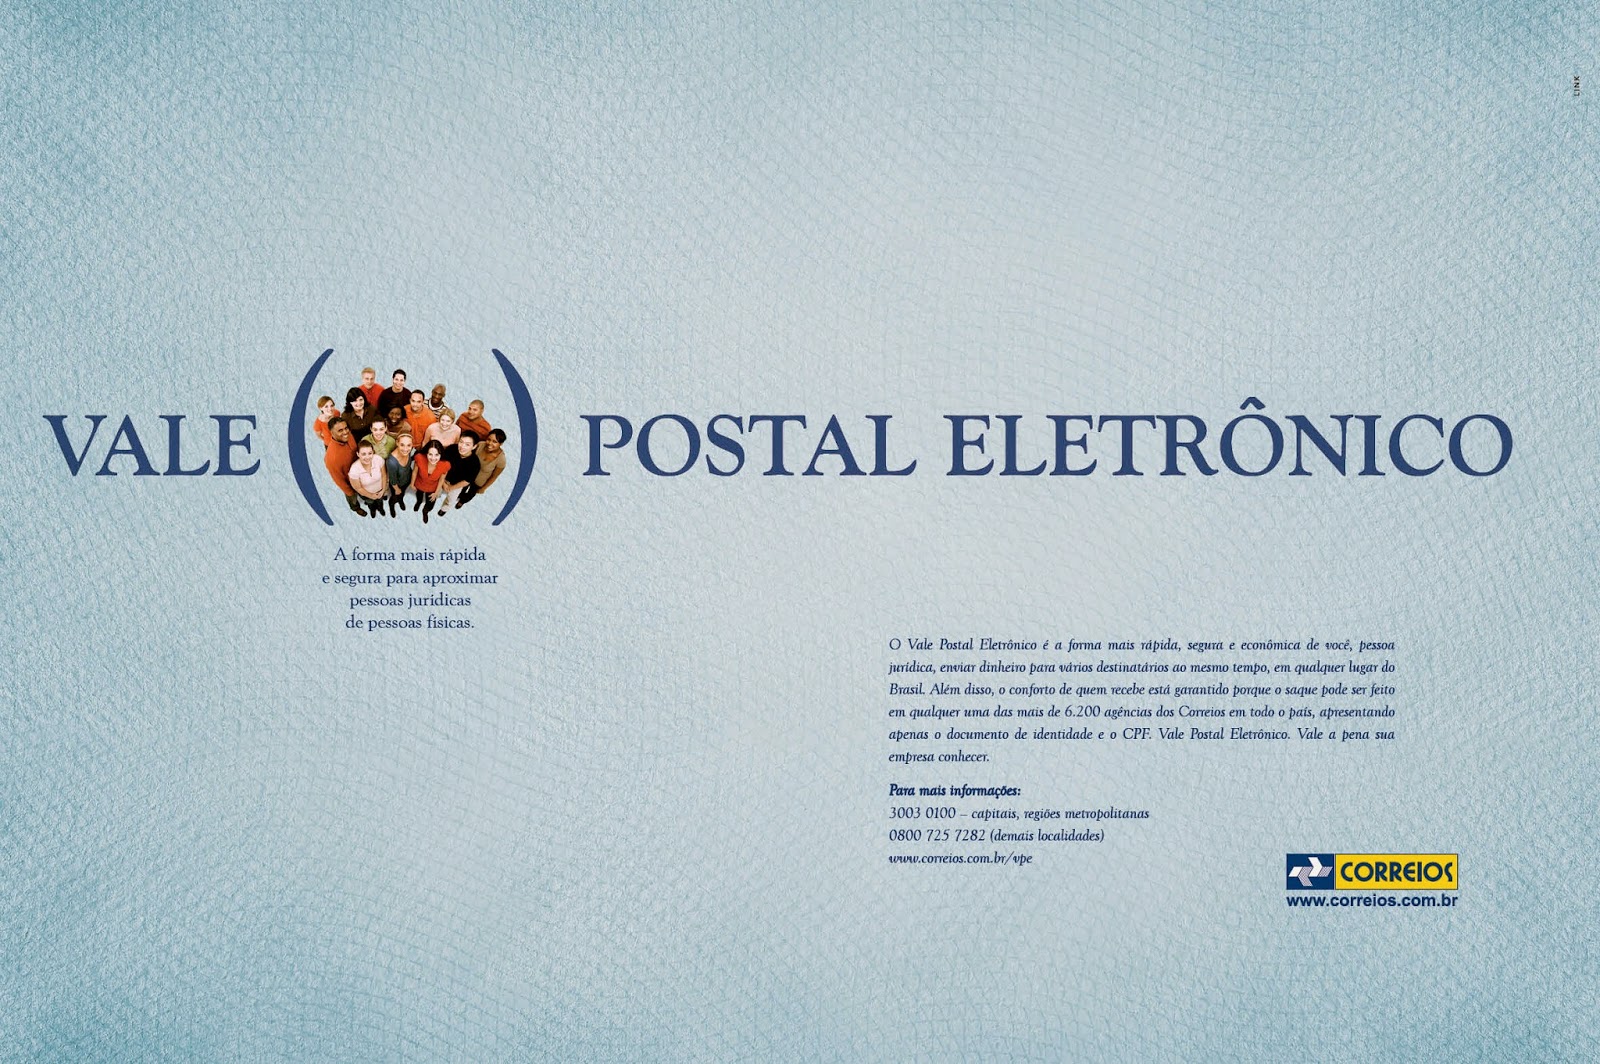 Guia Postal Brasileiro Eletronico